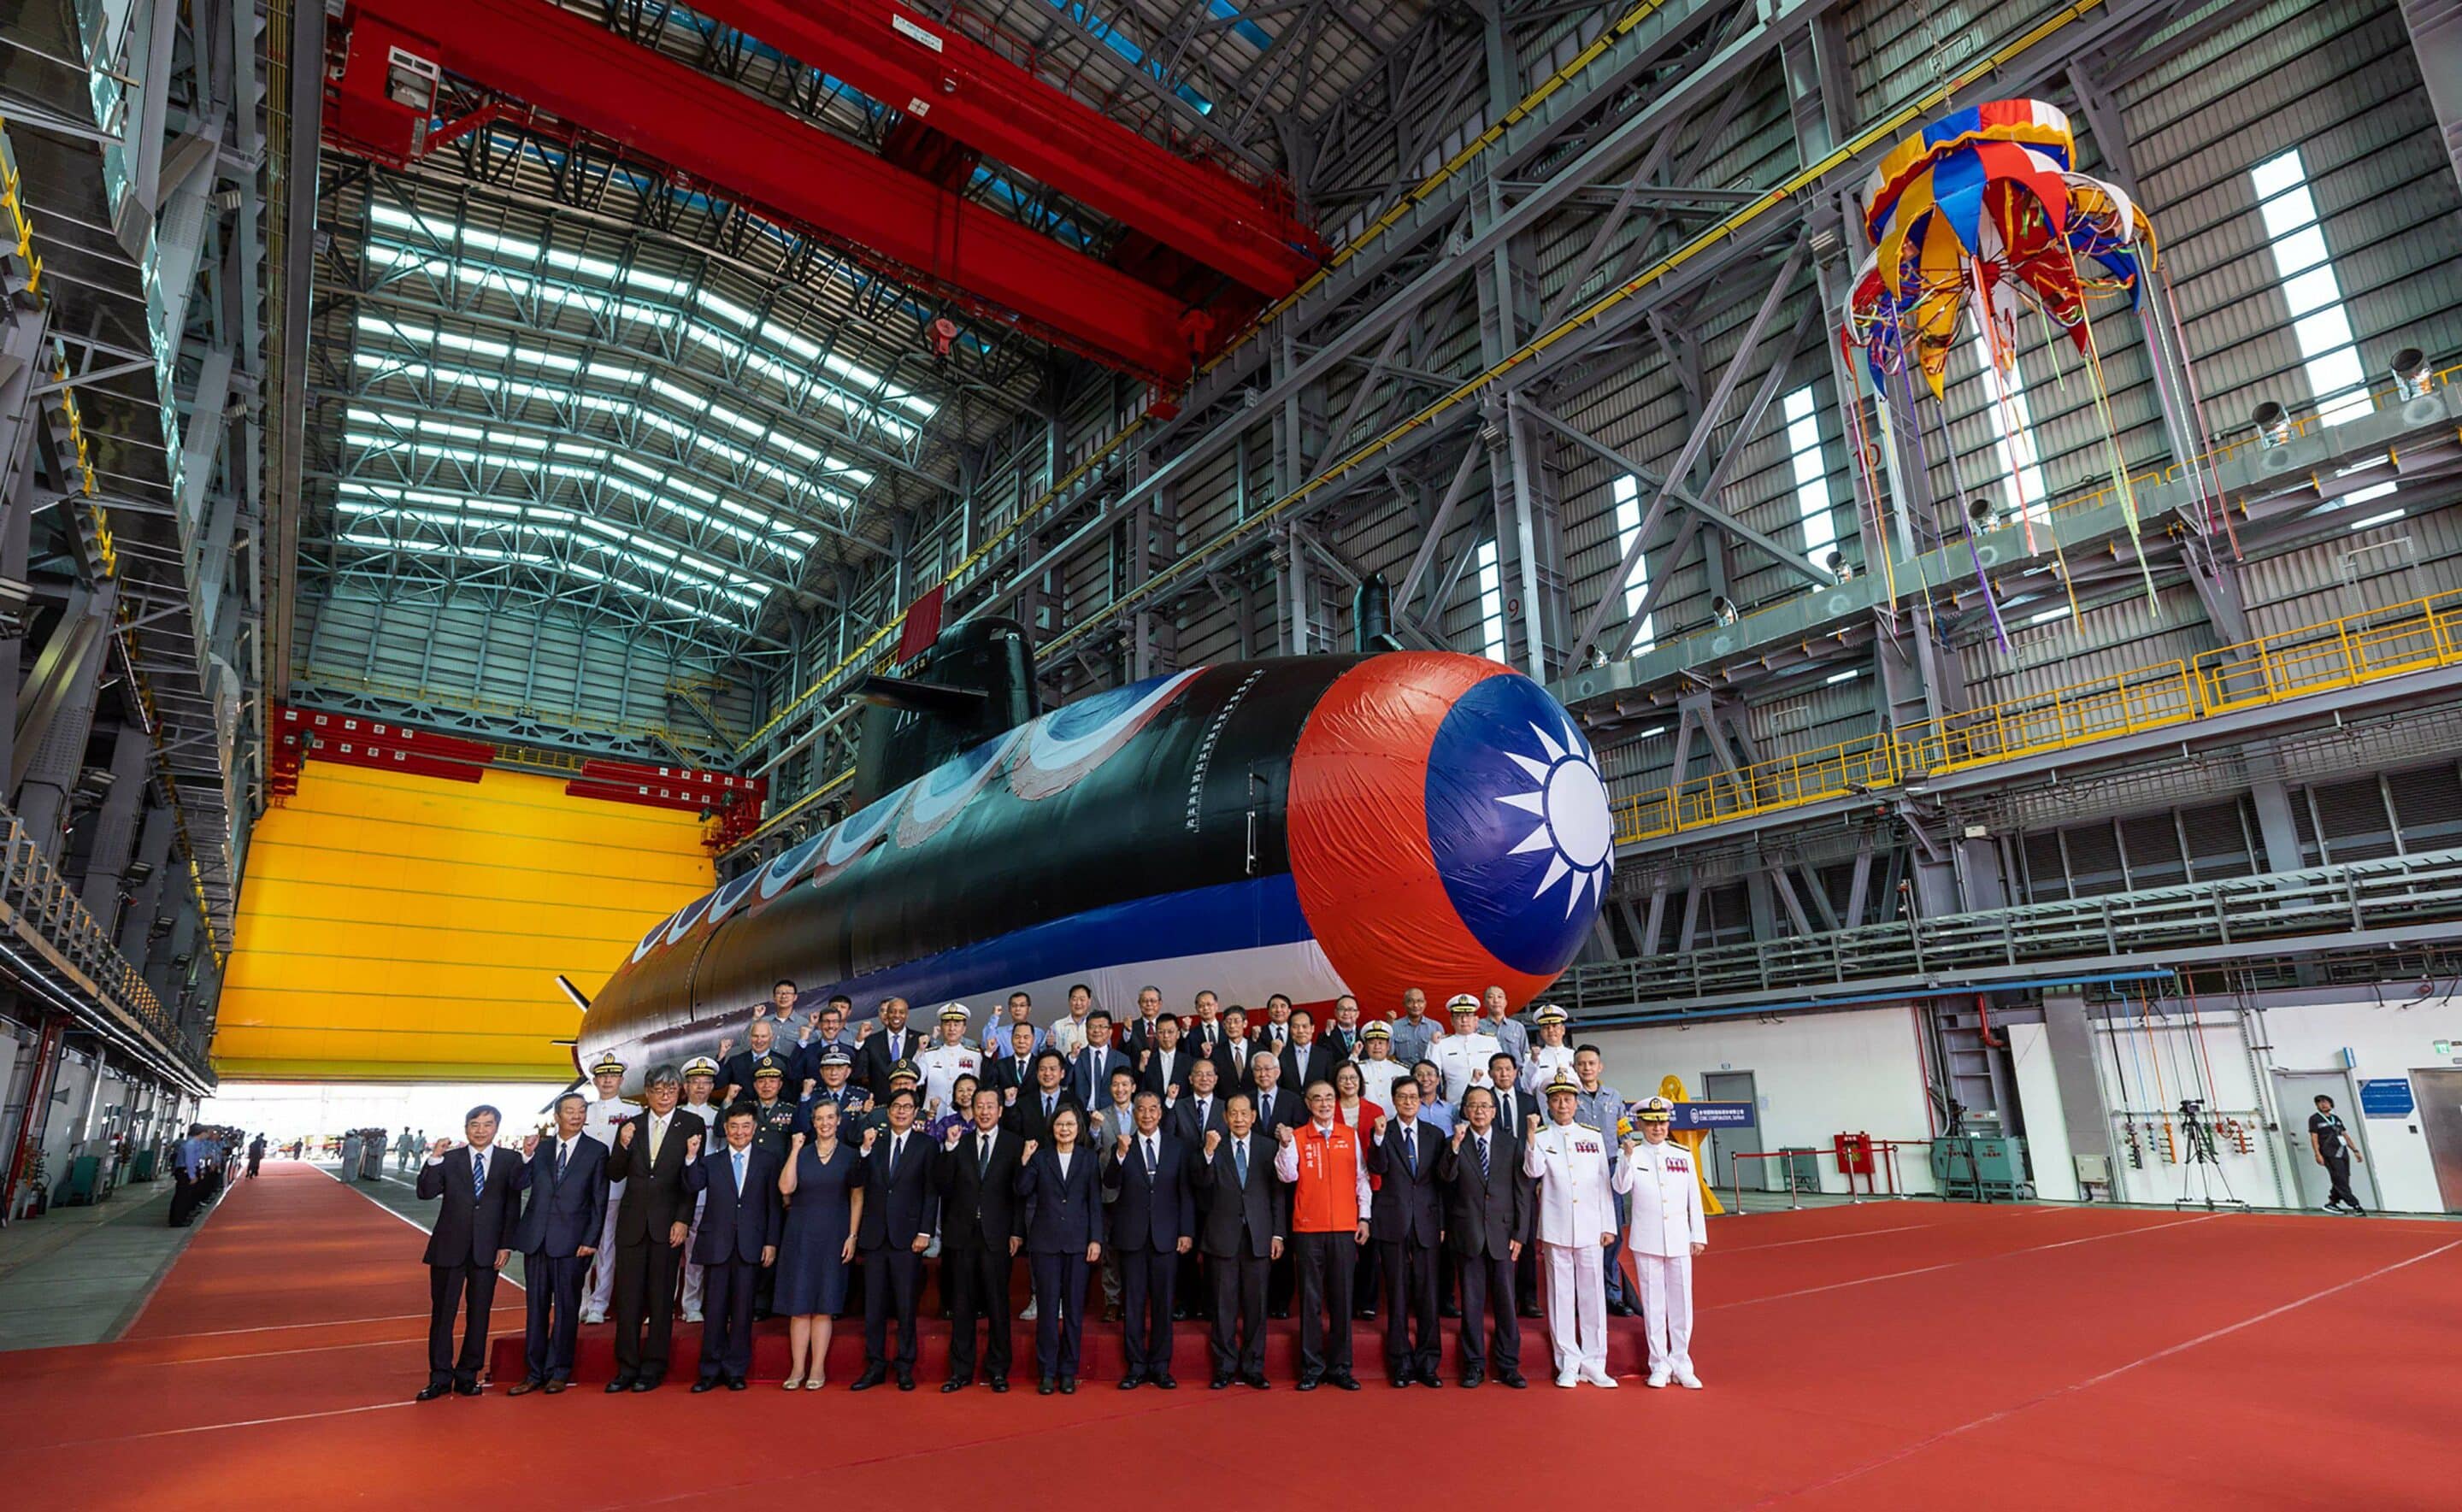 La présidente de Taïwan présente son premier sous-marin. Mandatory Credit: Photo by Wang Yu Ching/Taiwan's President Press Office/UPI/Shutterstock (14130149o)